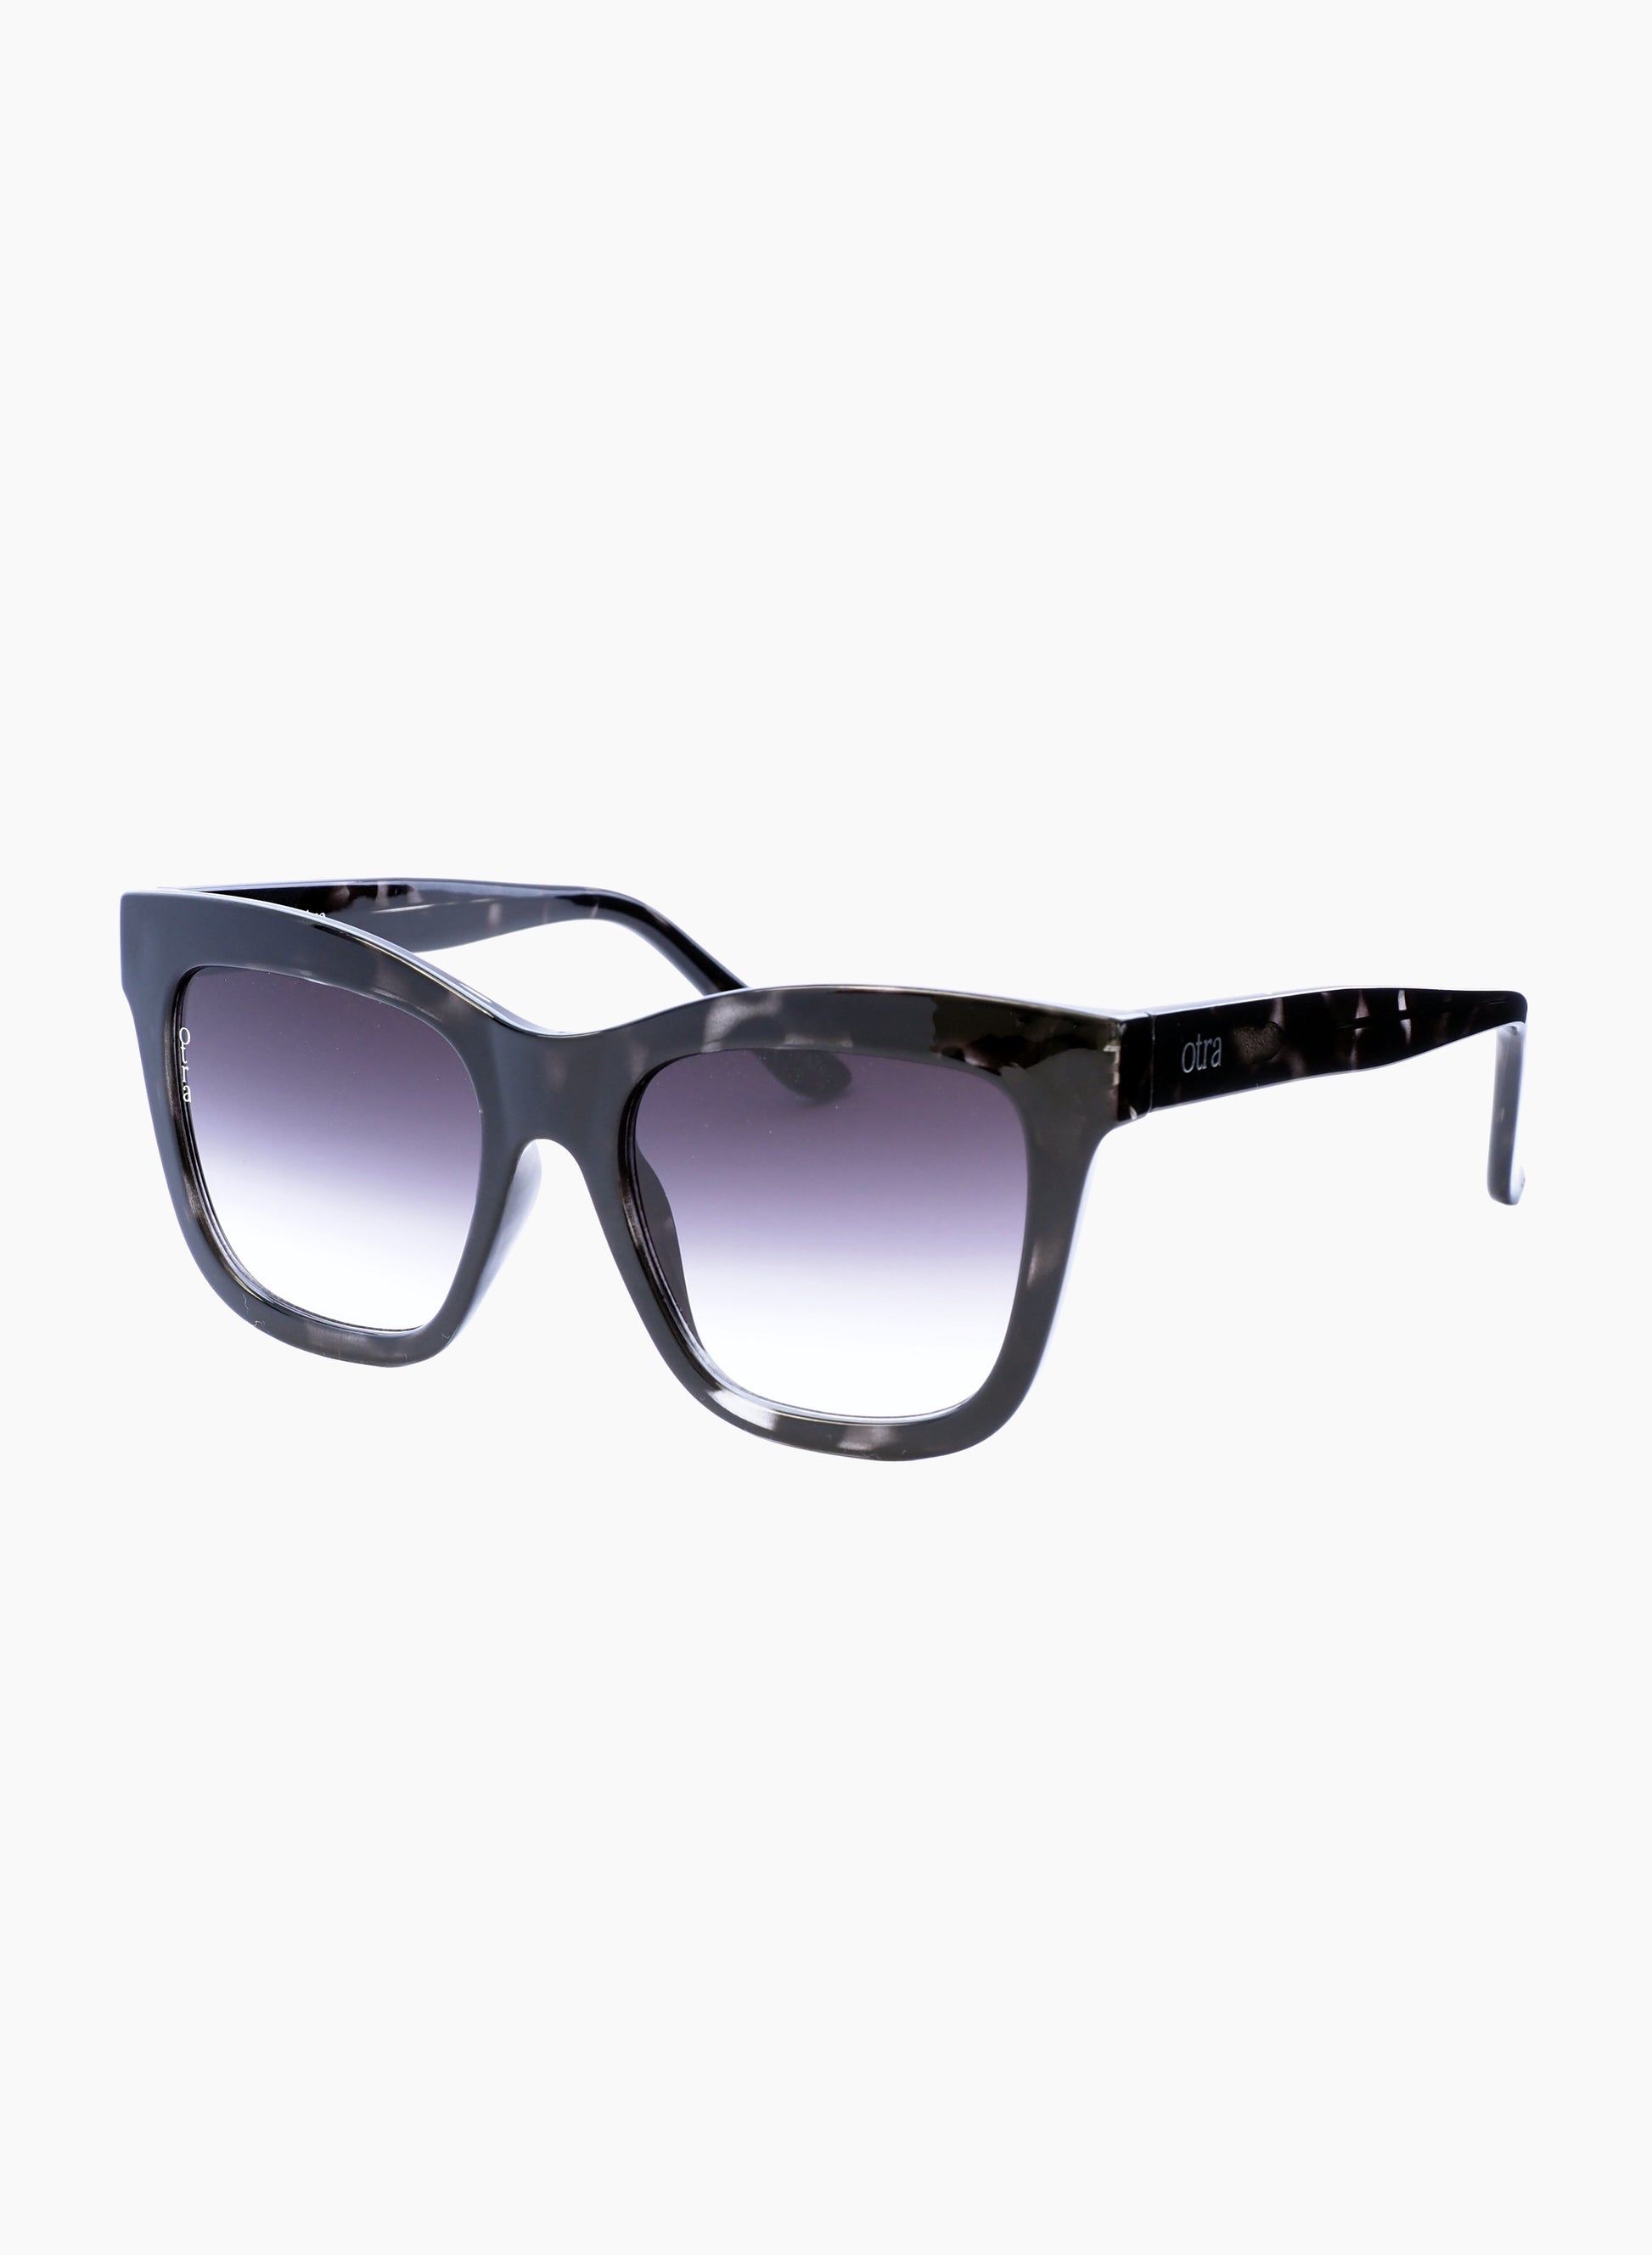 Side view of Irma oversized cat eye sunglasses in black tortoiseshell